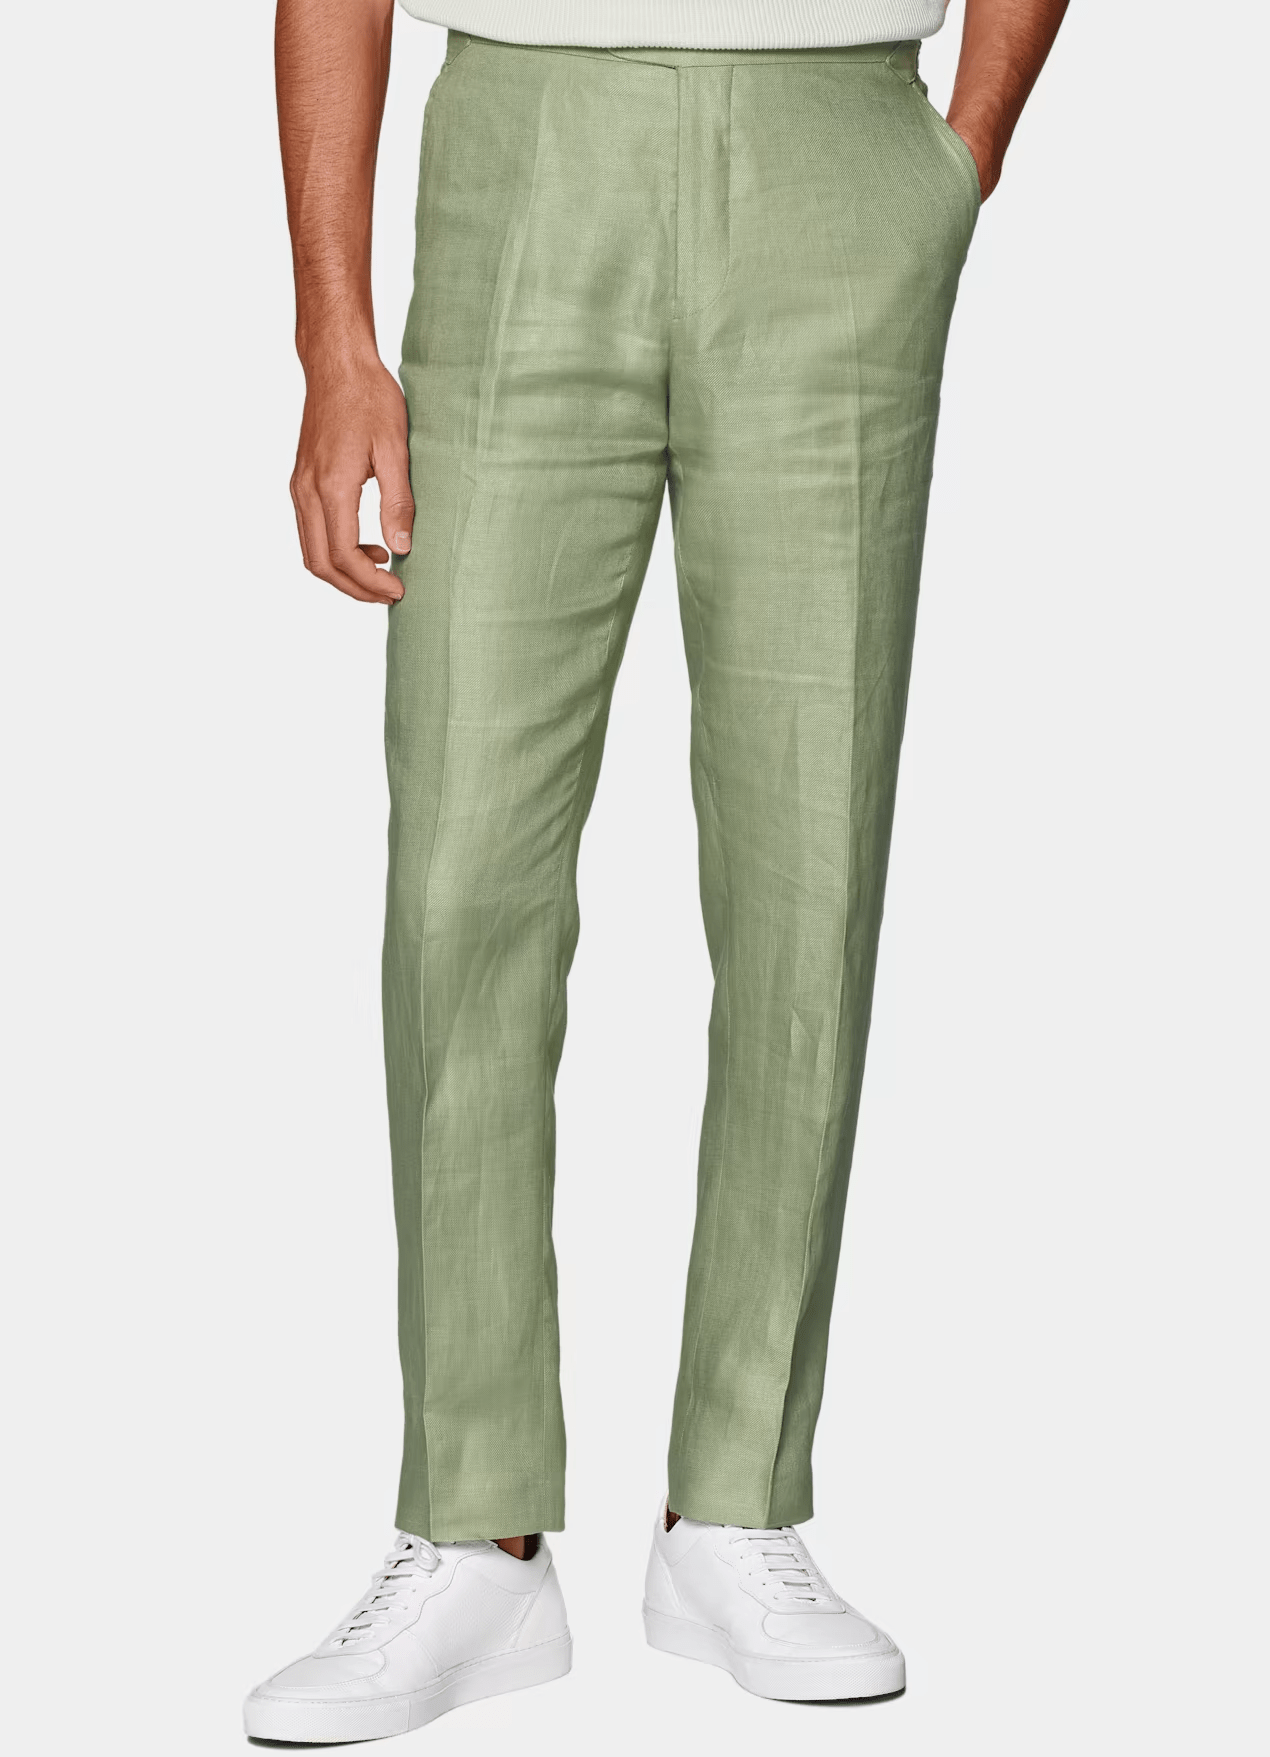 ceehuteey Linen Fashion Double Breasted Peak lapel for Men Solid Suit(Blazer+Pants)